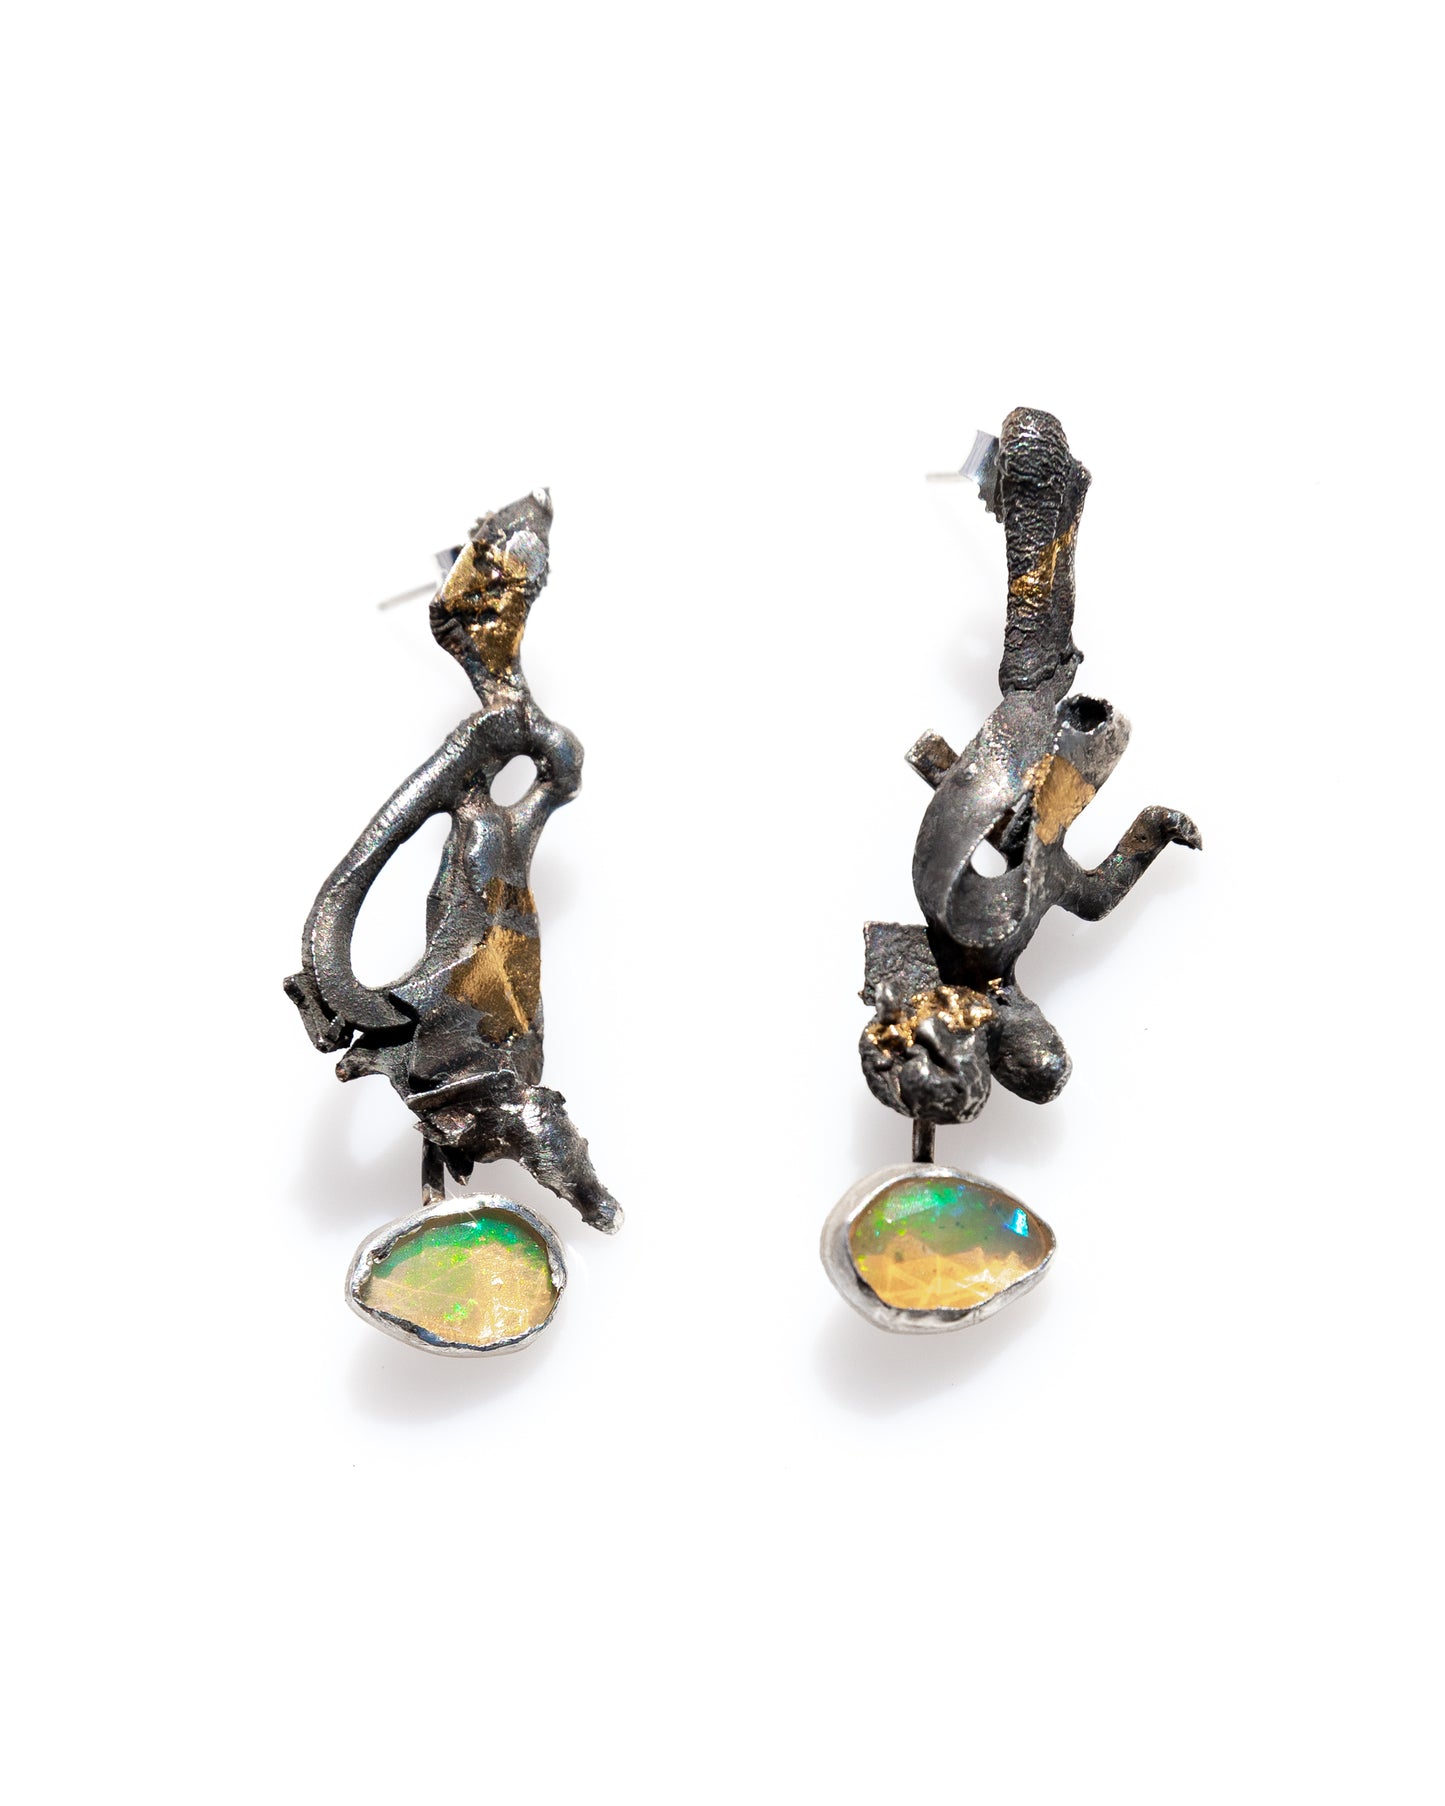 Asymmetric keum boo earrings with Opals